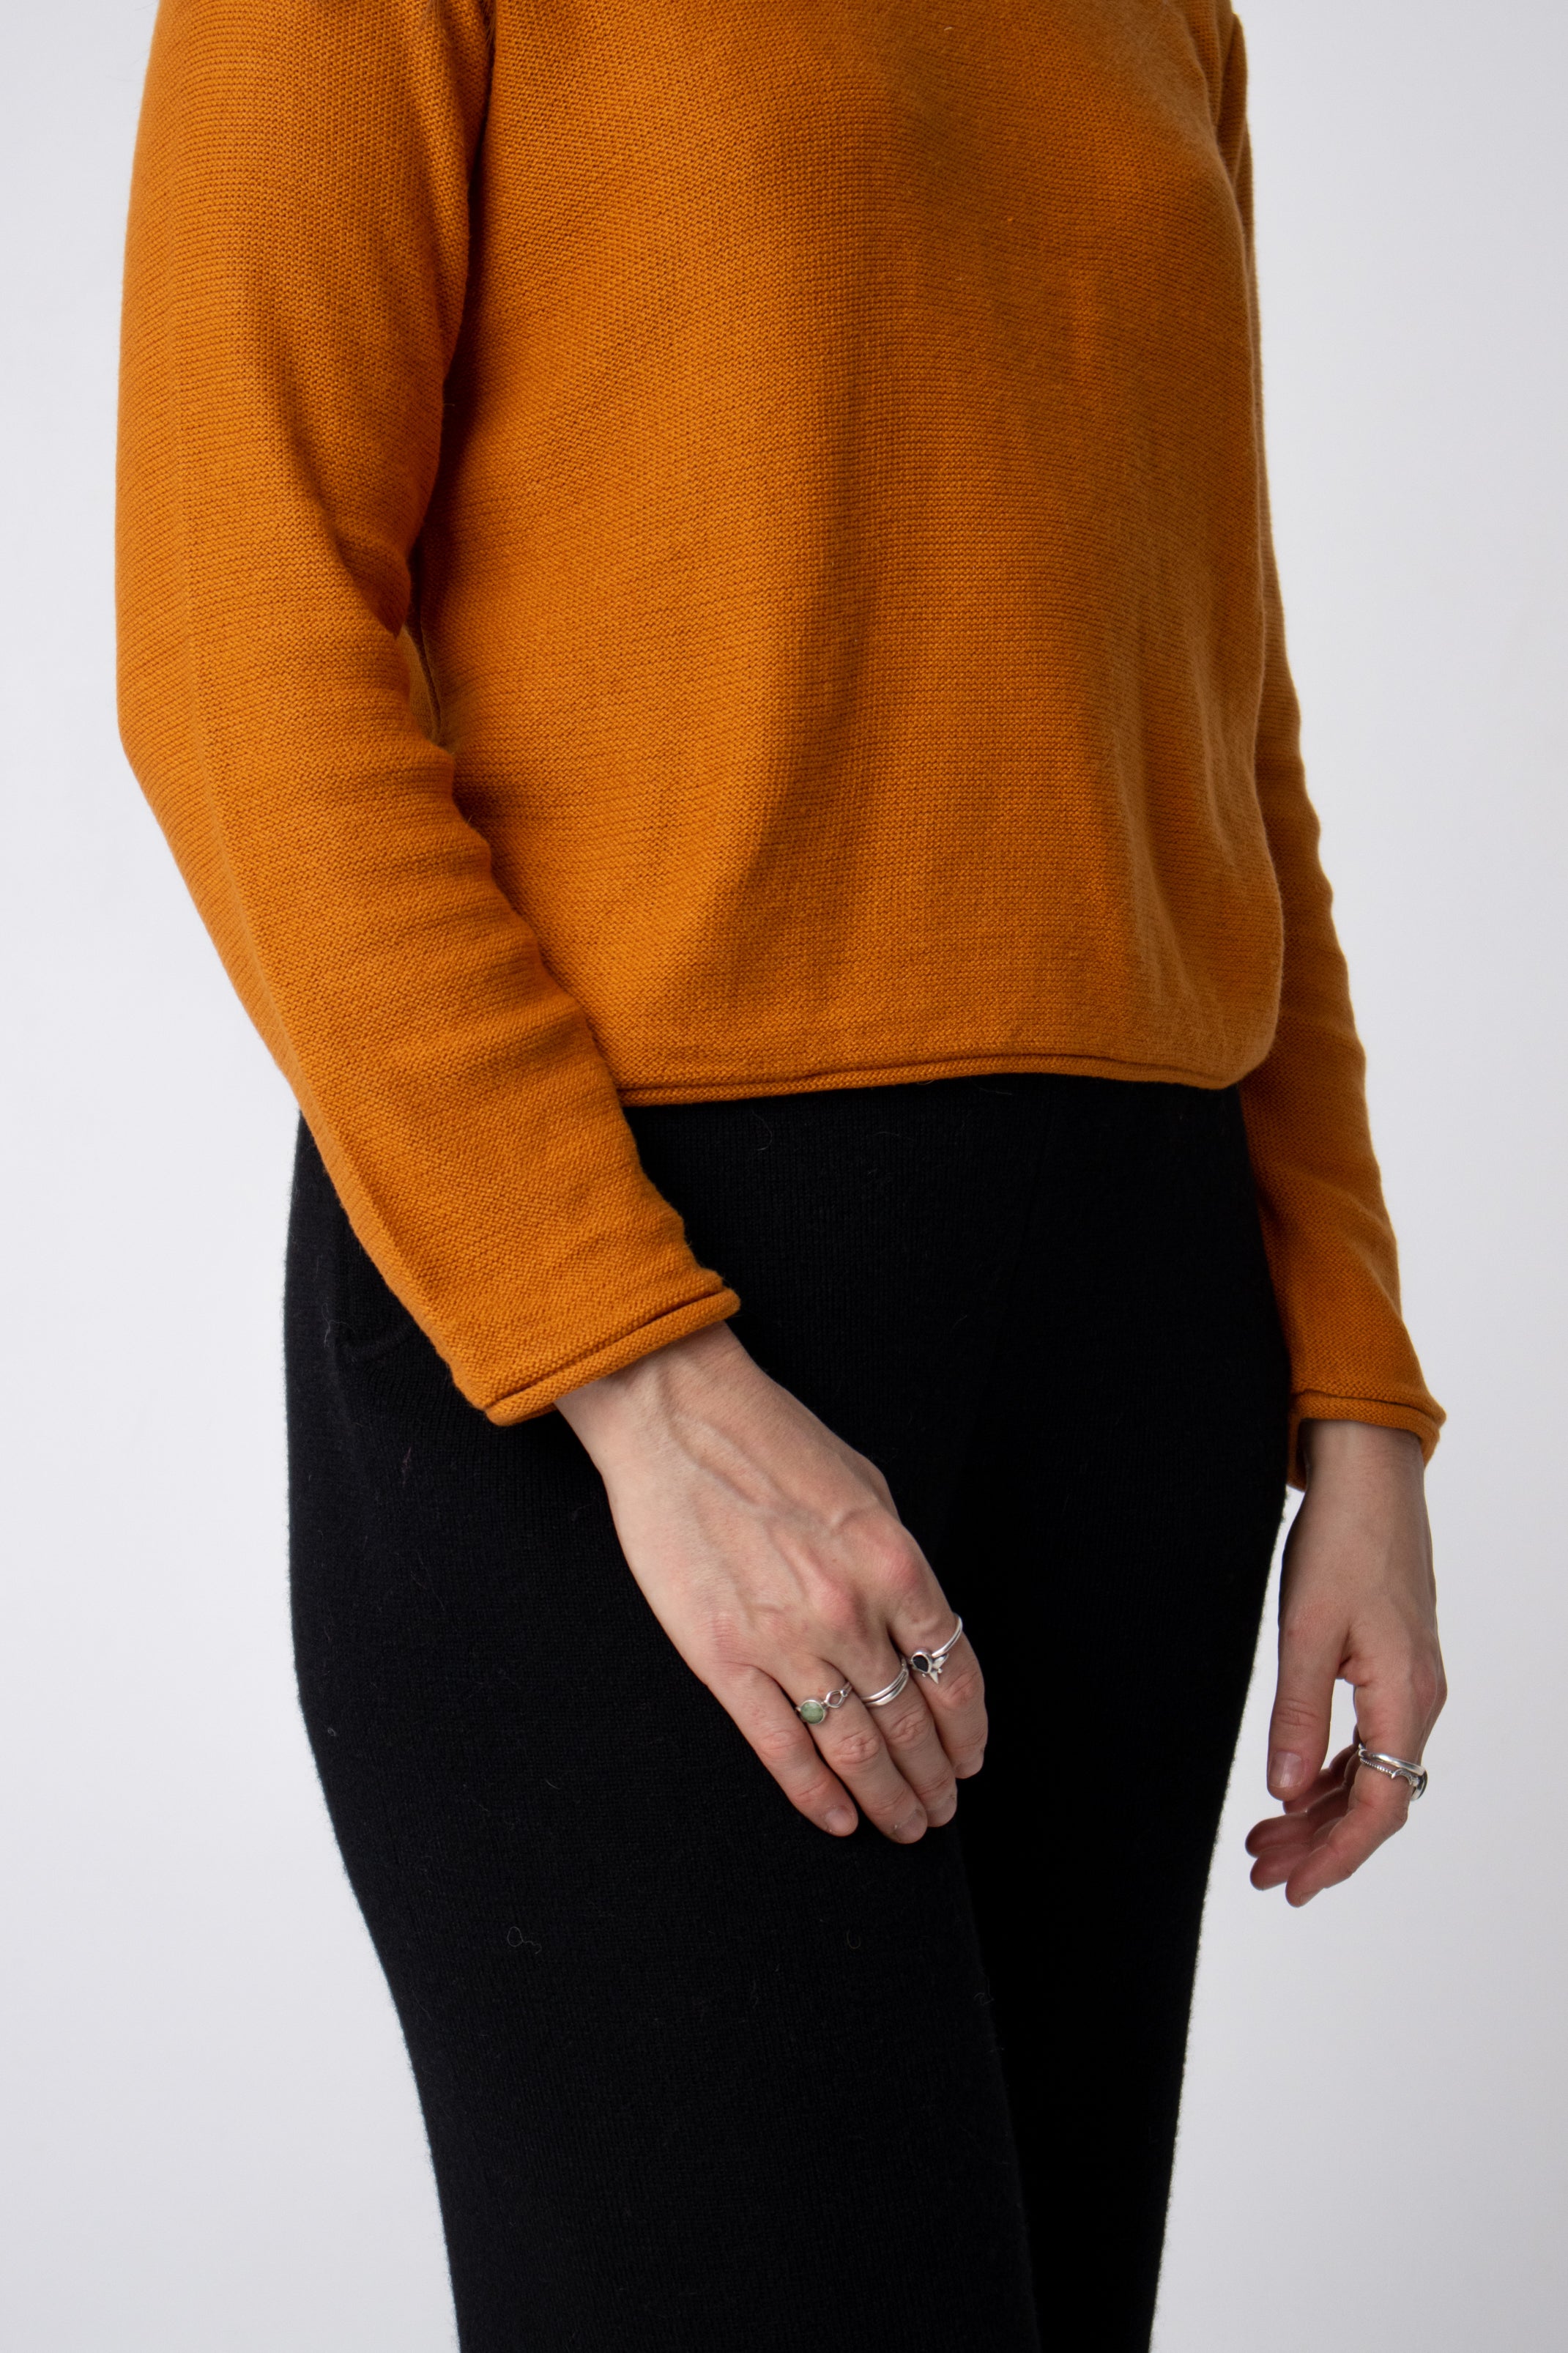 buy orange long sleeve knit top in melbourne#colour_oxide-orange